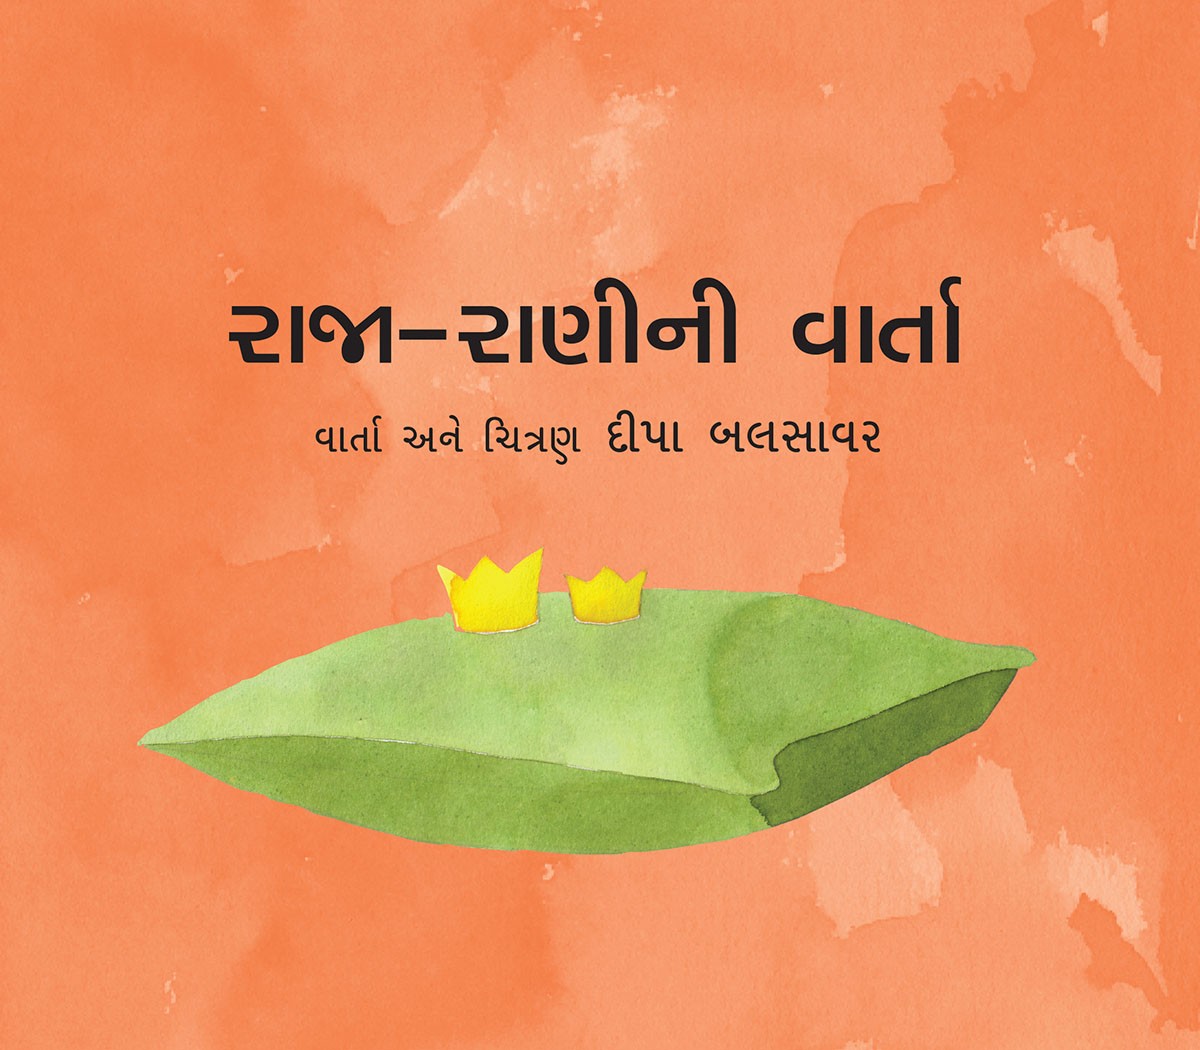 The Lonely King And Queen/Raaja-Raaninee Vaarta (Gujarati)